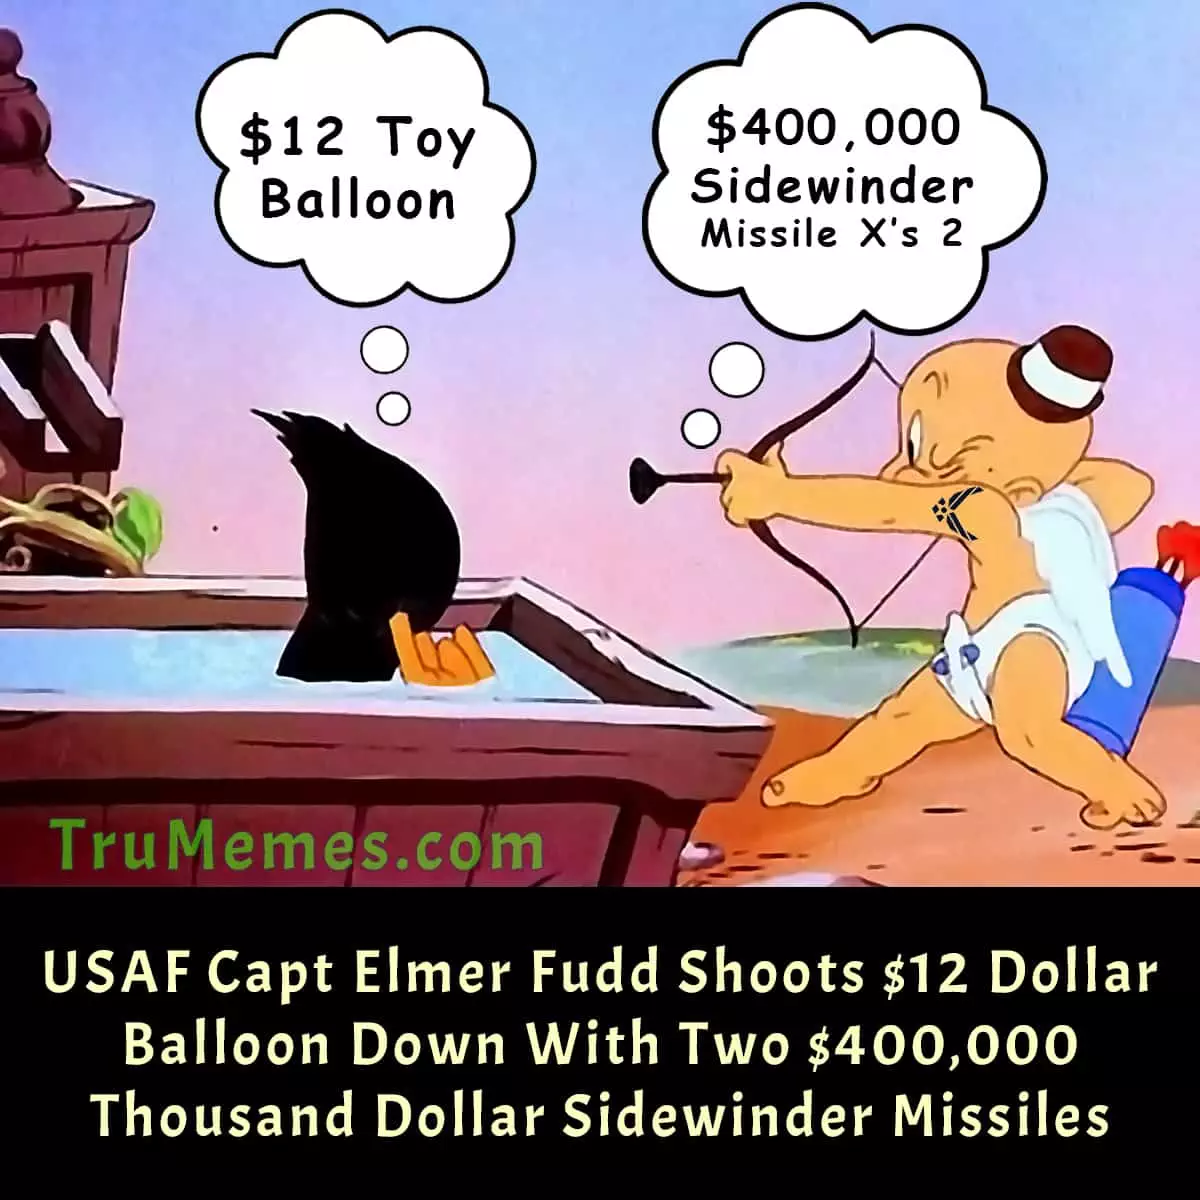 USAF Capt Elmer Fudd Shoots $12 Dollar Balloon Down With Two $400,000 Thousand Dollar Sidewinder Missiles